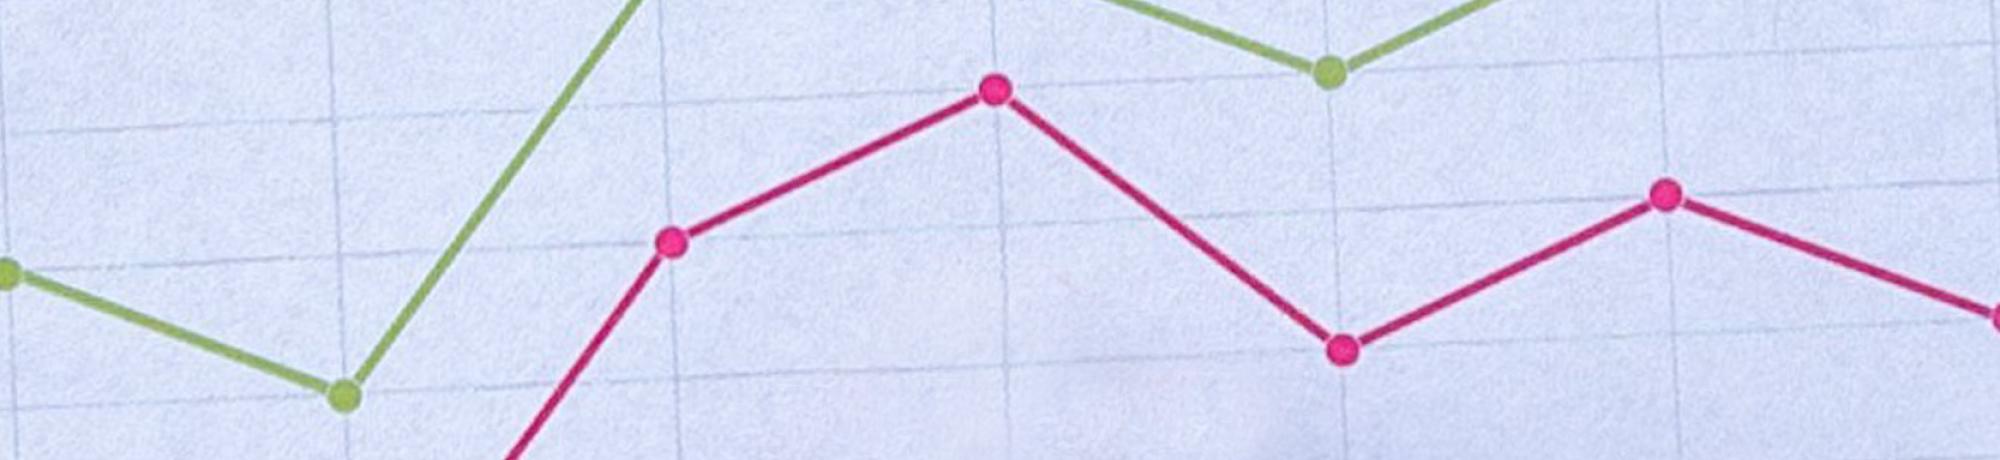 sample line graph